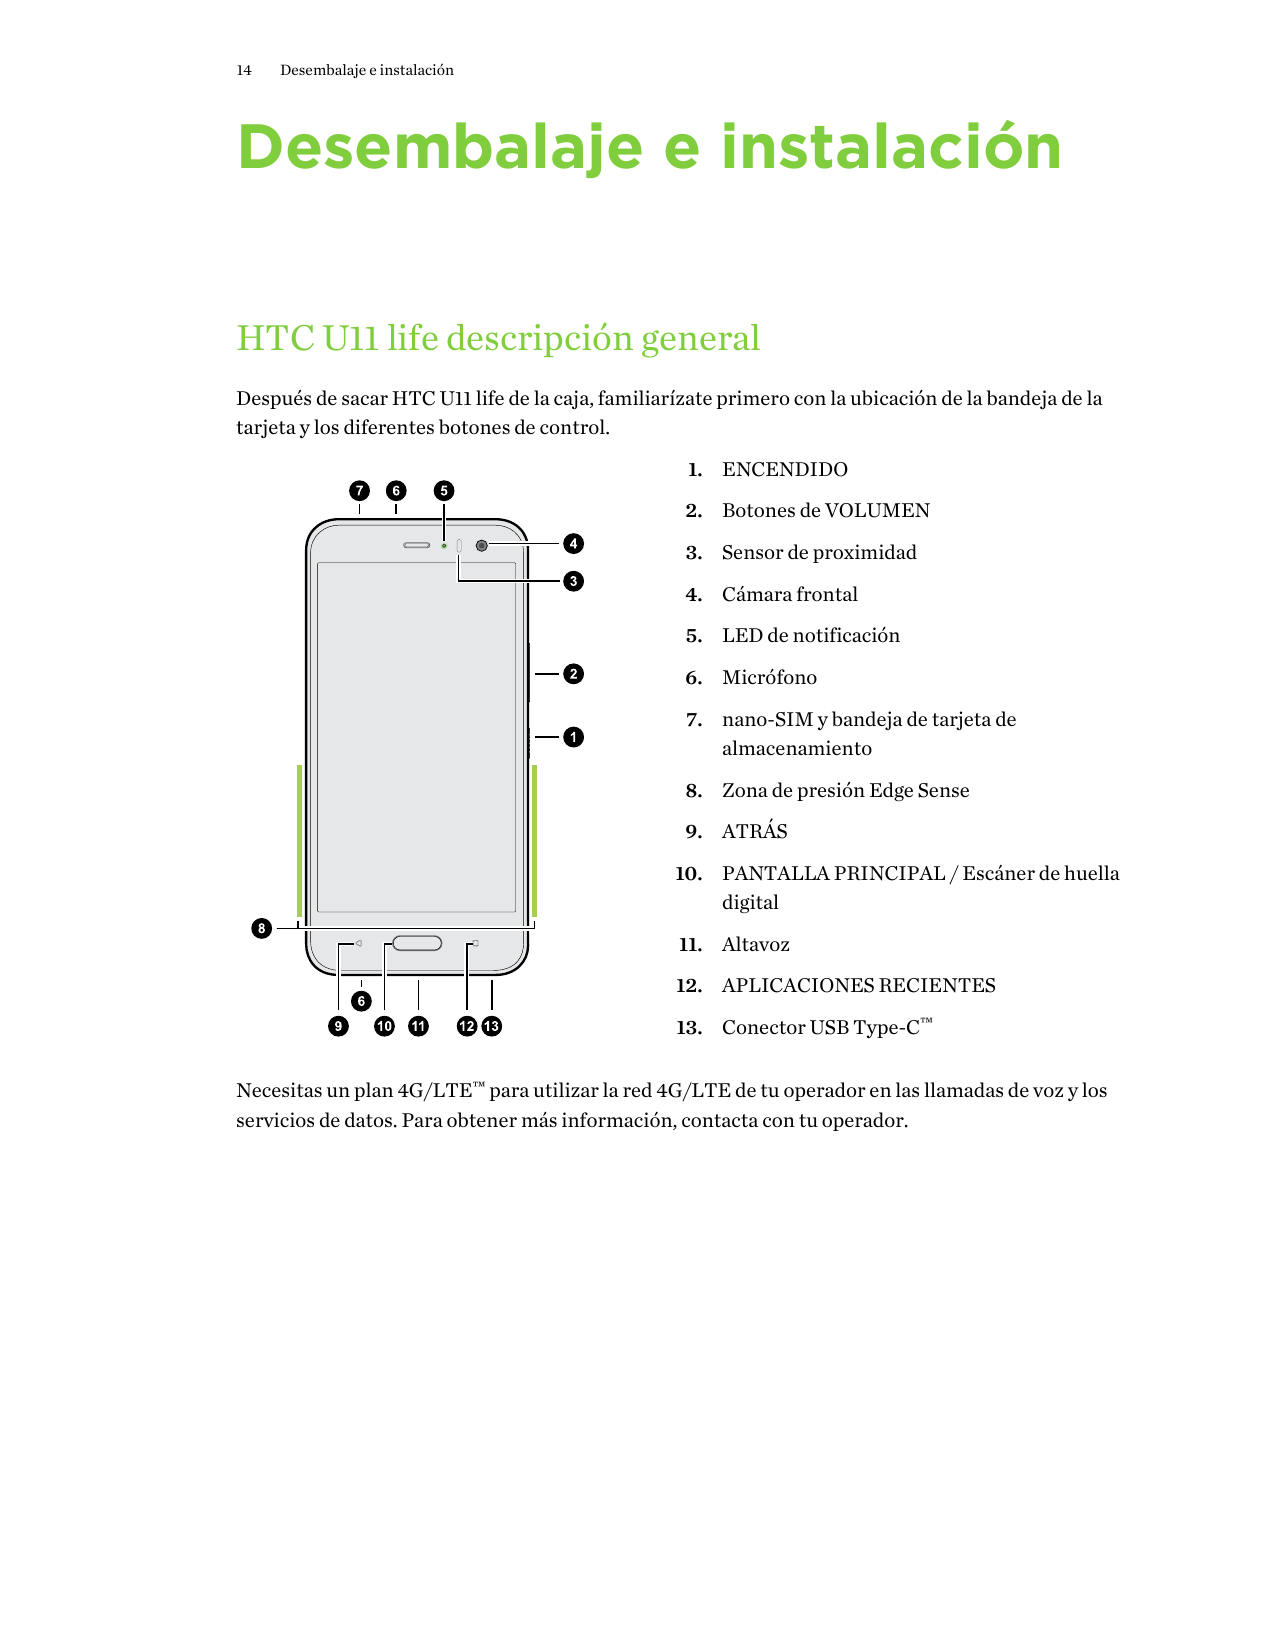 14Desembalaje e instalaciónDesembalaje e instalaciónHTC U11 life descripción generalDespués de sacar HTC U11 life de la caja, fa